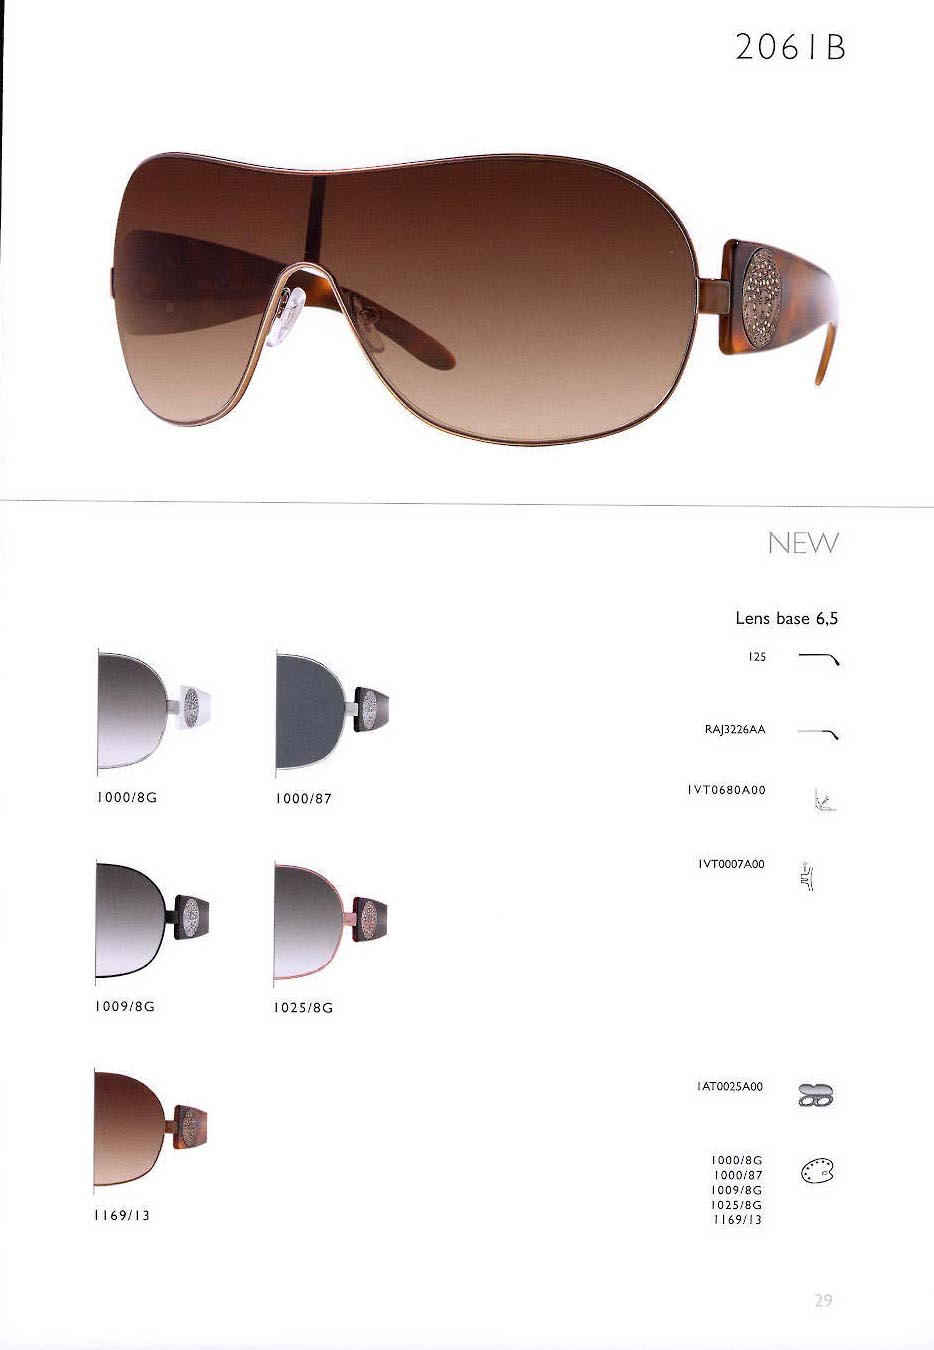 Sunglasses Versace 2061B 116913